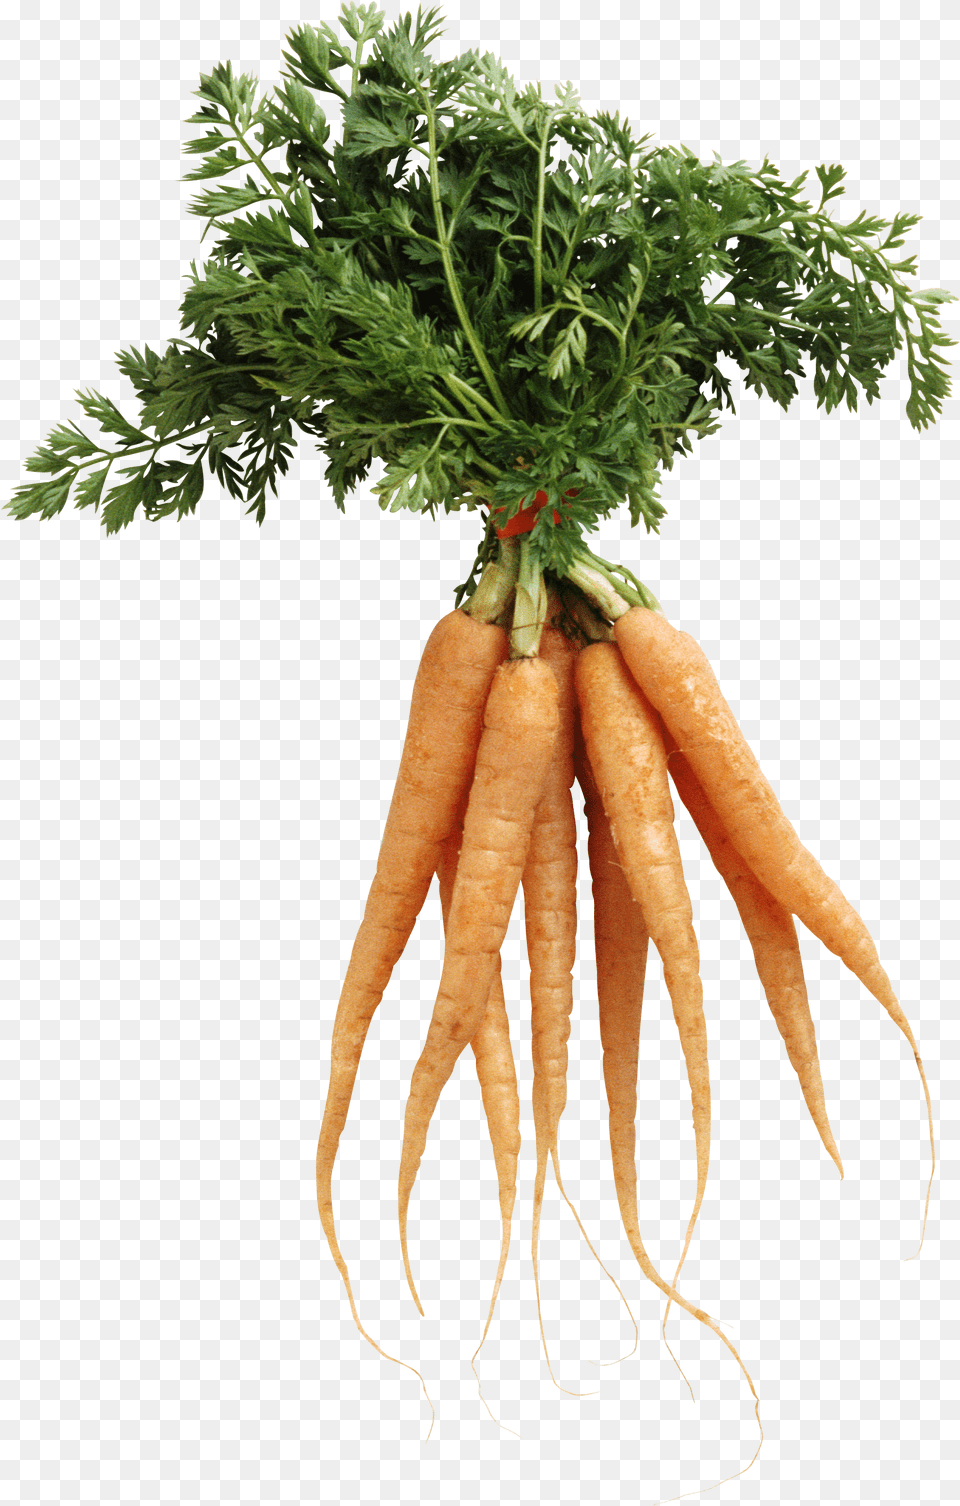 Carrot Image Transparent Background Carrots Transparent, Food, Plant, Produce, Vegetable Png